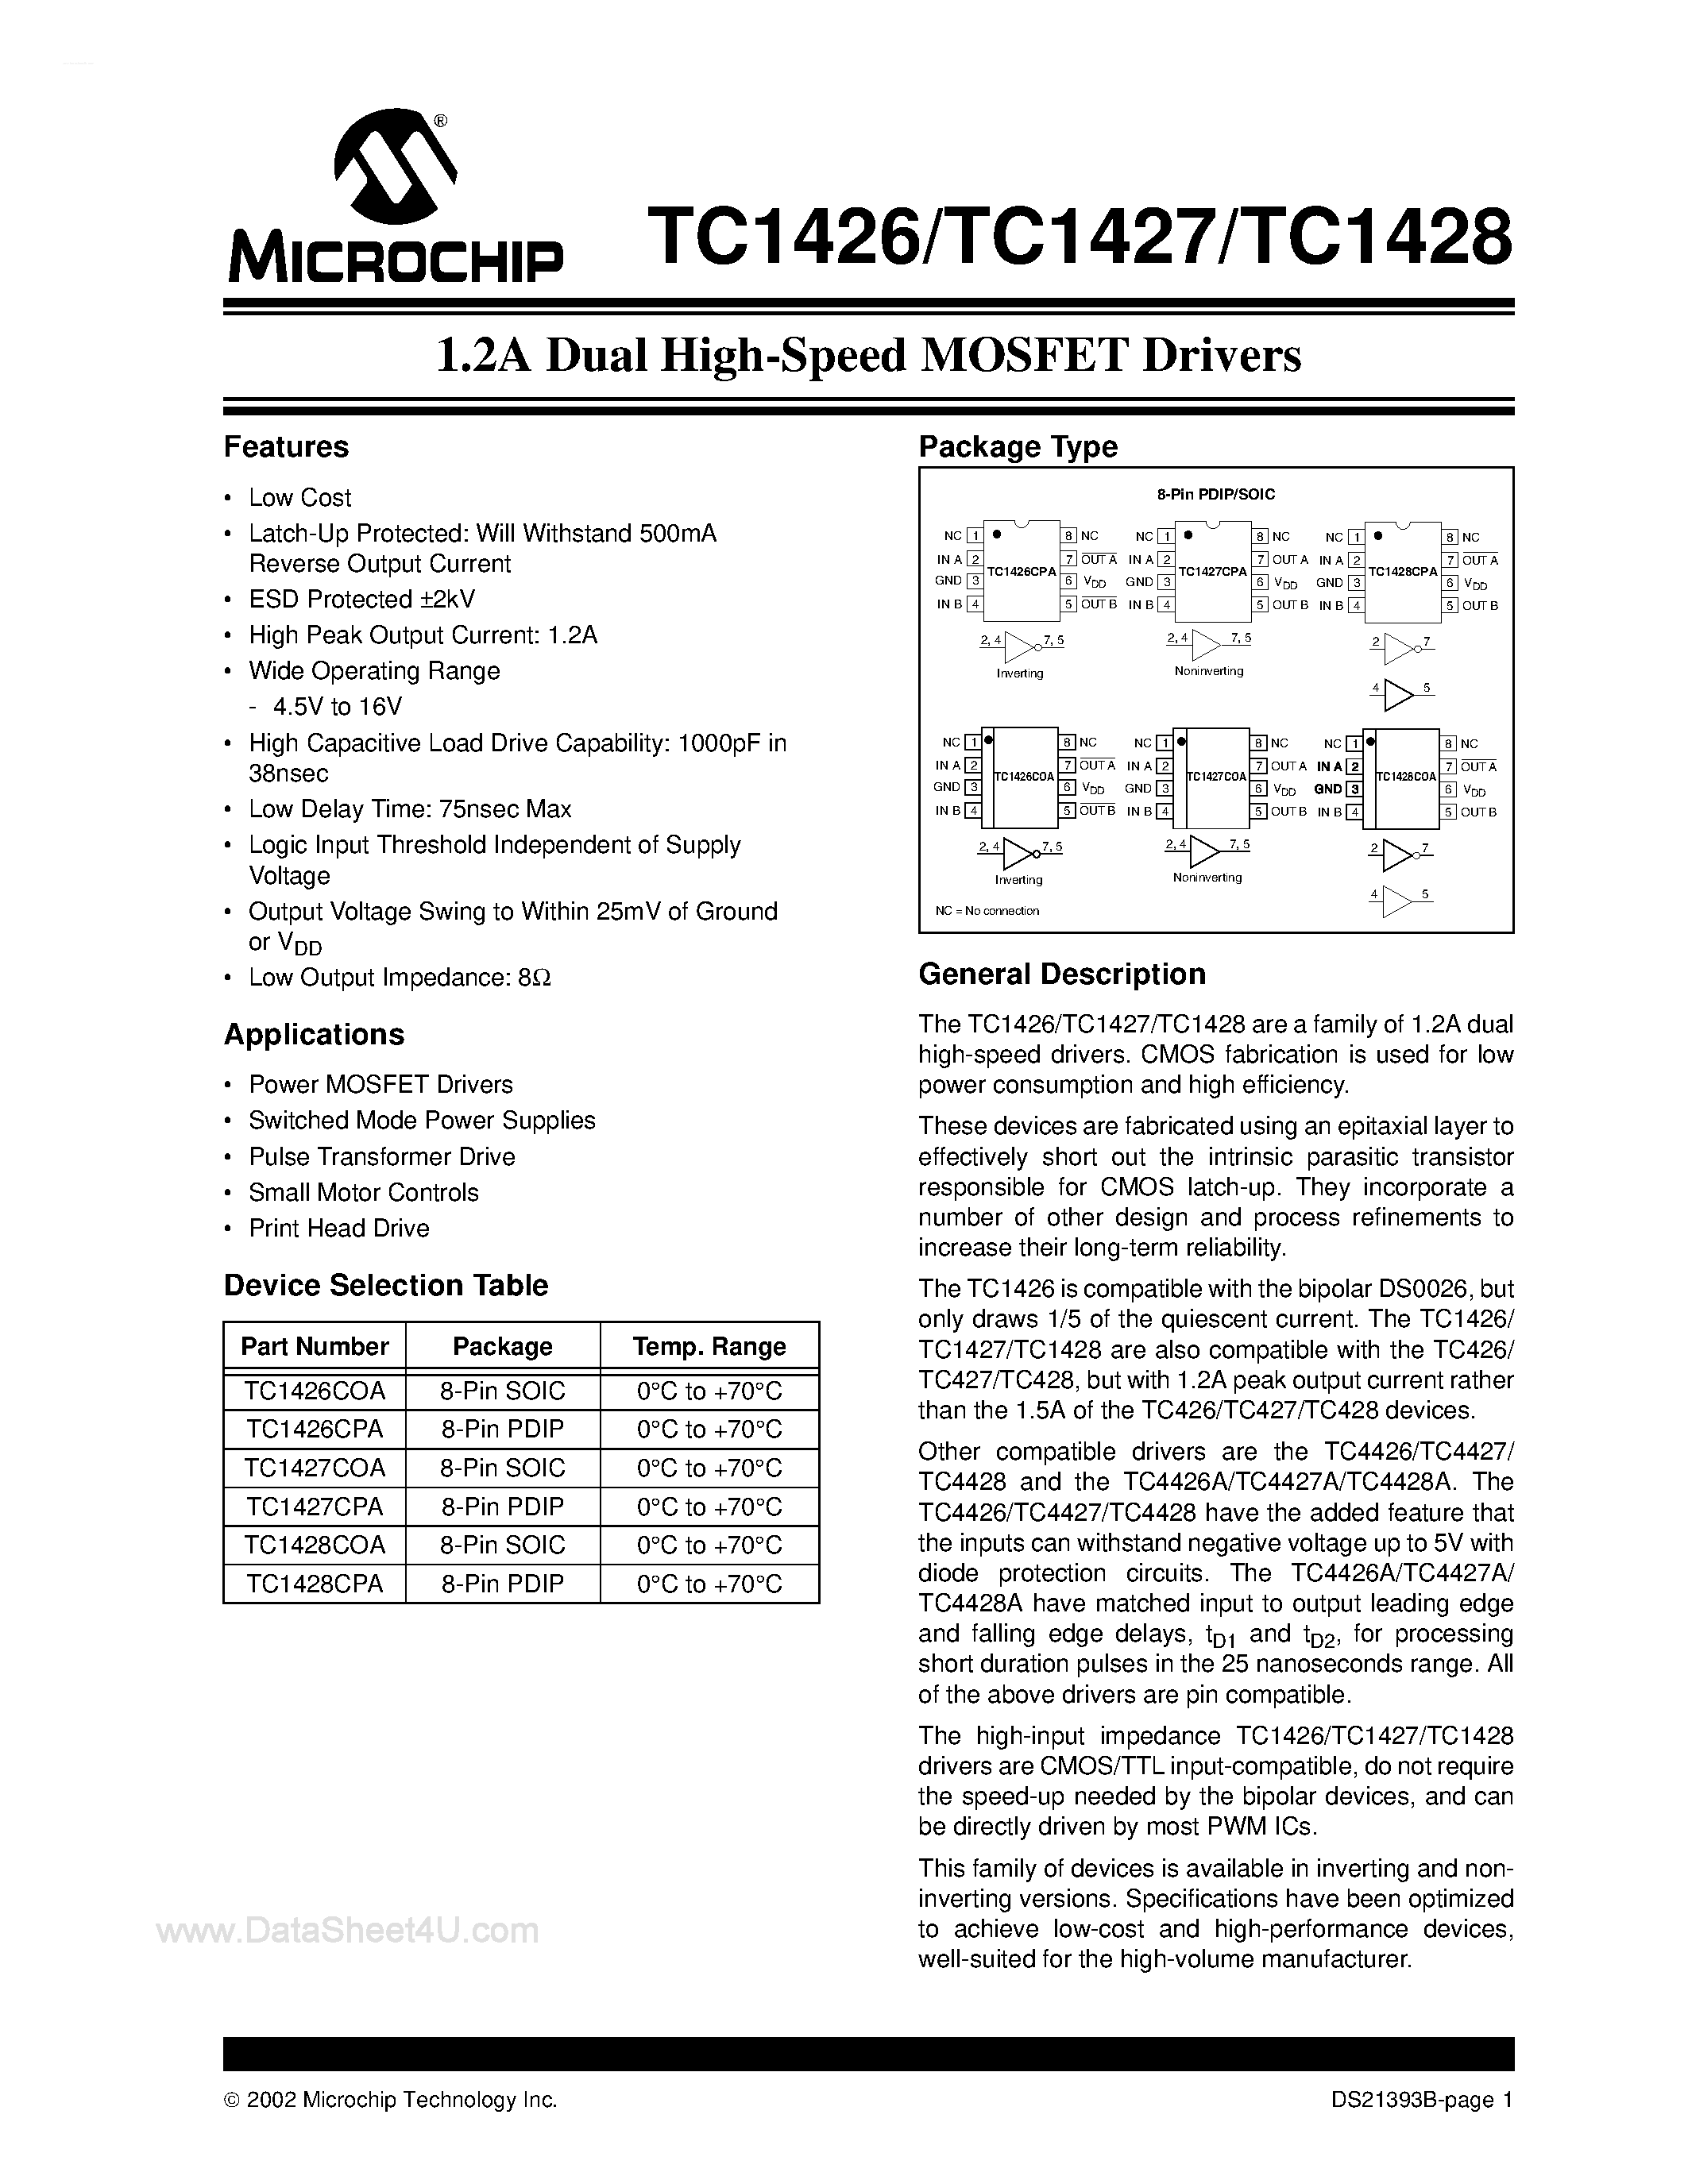 Даташит TC1426 - (TC1426 - TC1428) 1.2A Dual High-Speed MOSFET Drivers страница 1